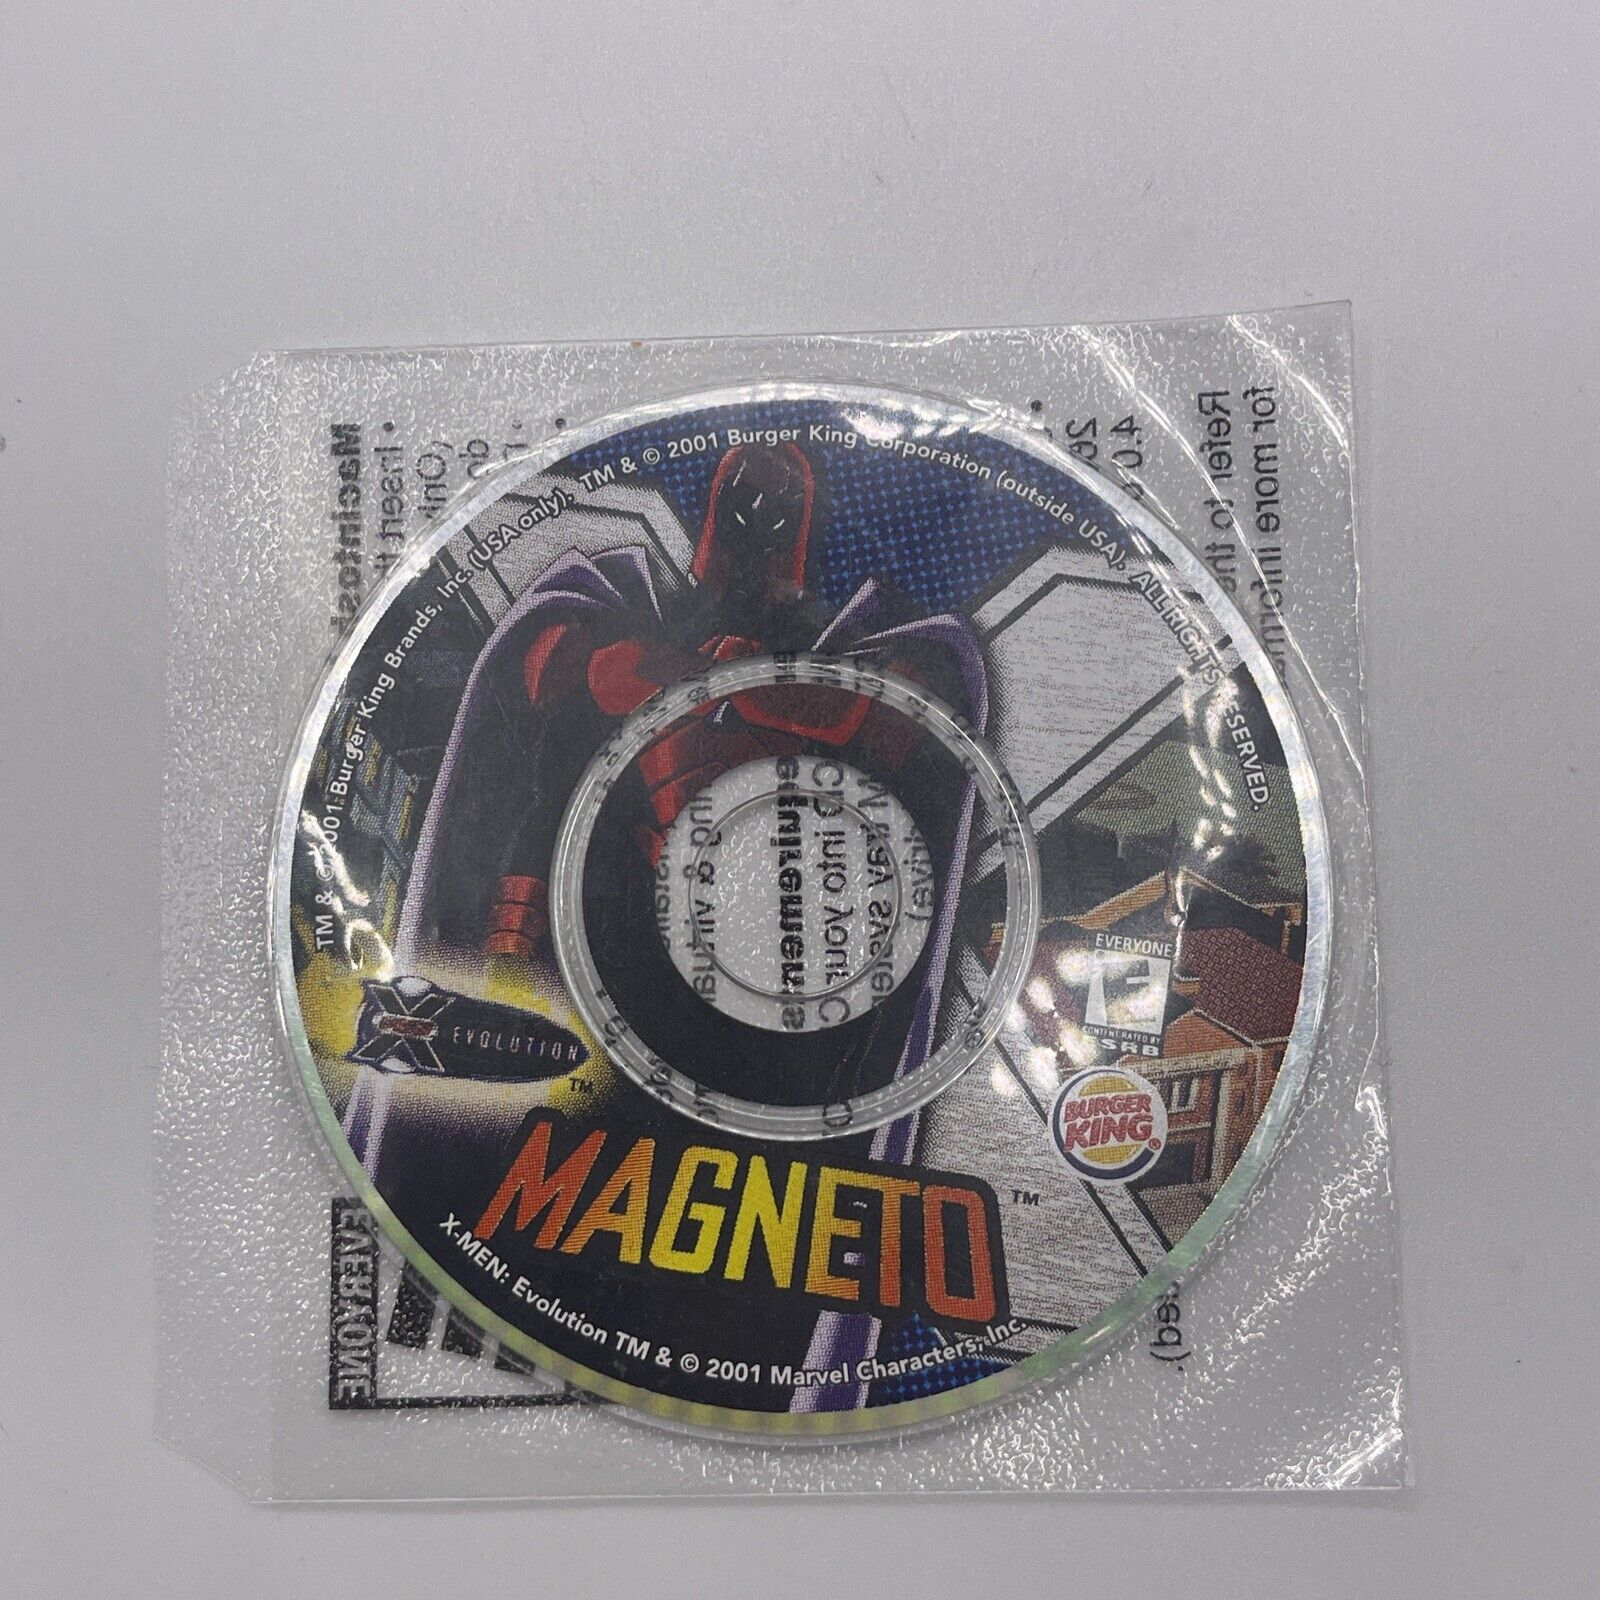 X-Men Evolution Magneto  Mini Disc 2001 Burger King Promotional